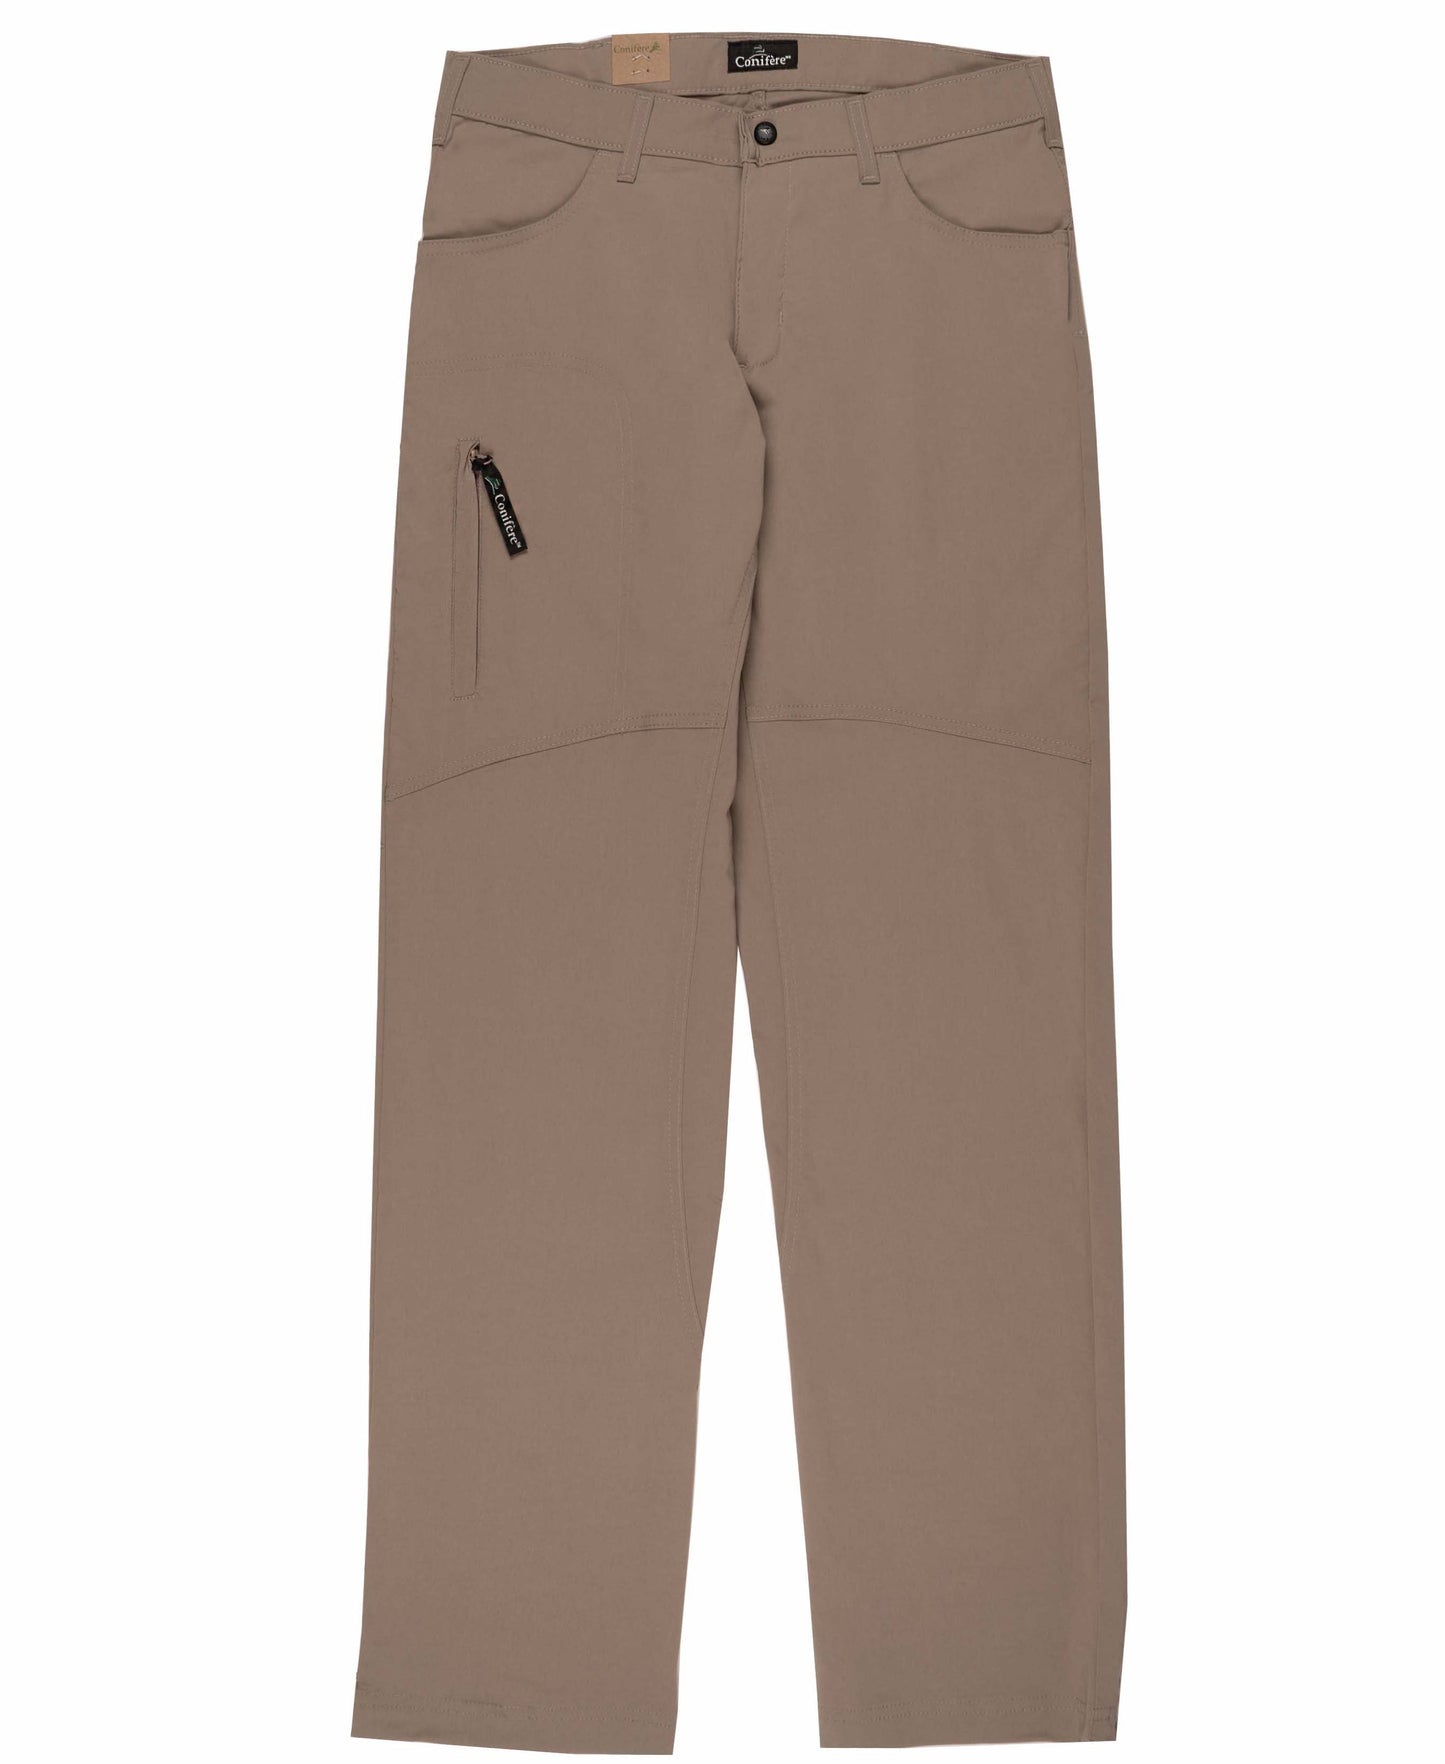 Plein Air Pantalon Beige - Pantalon Outdoor Beige